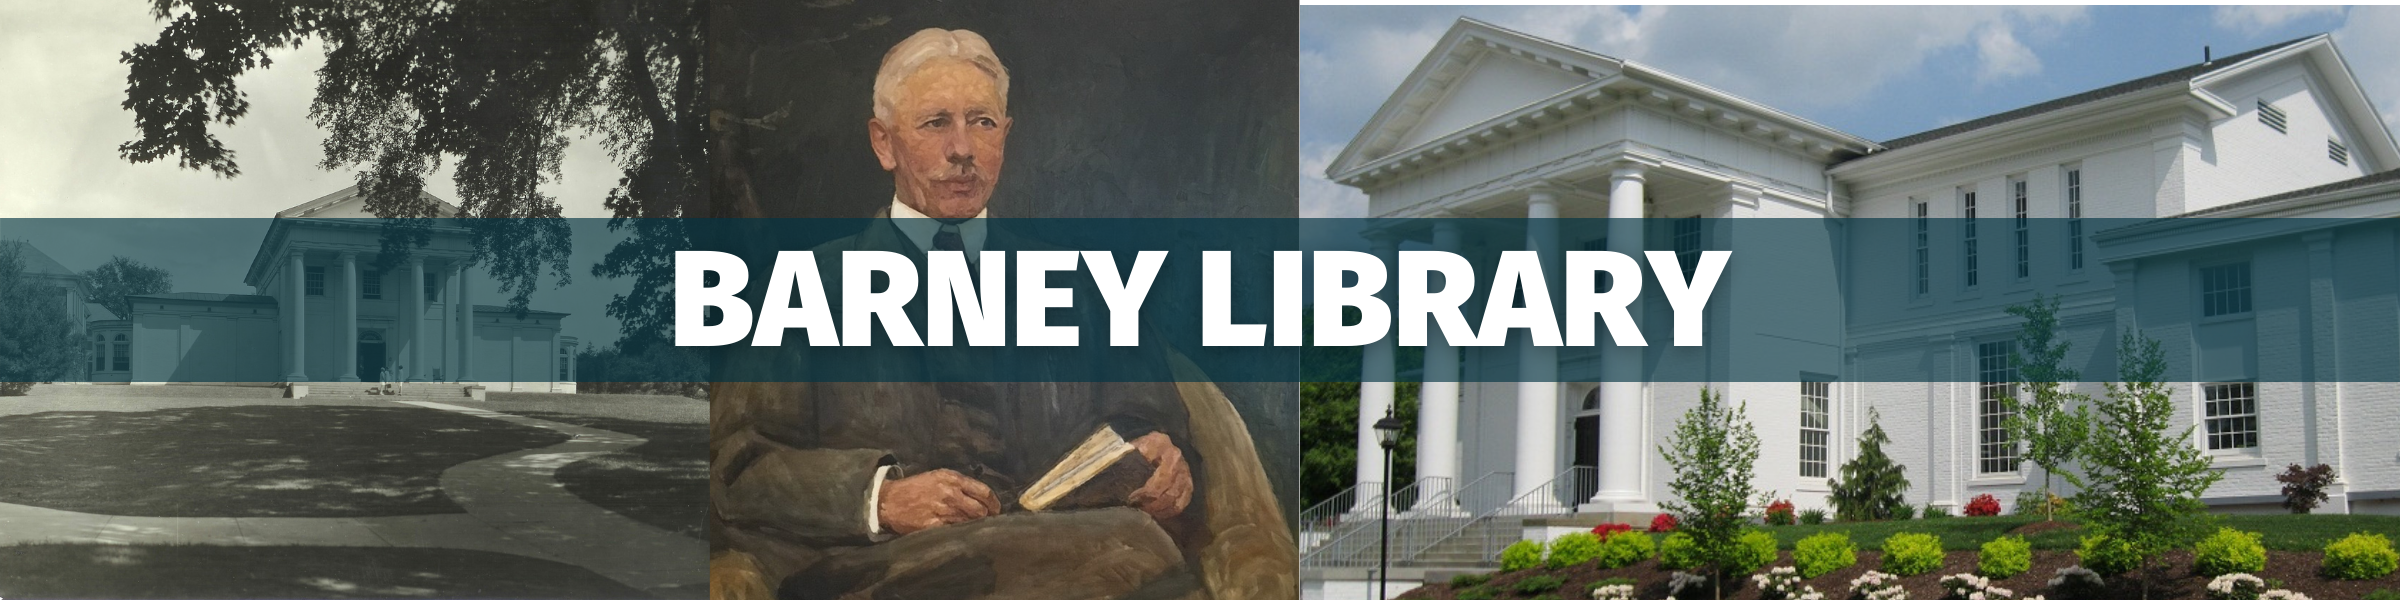 Barney Library Header